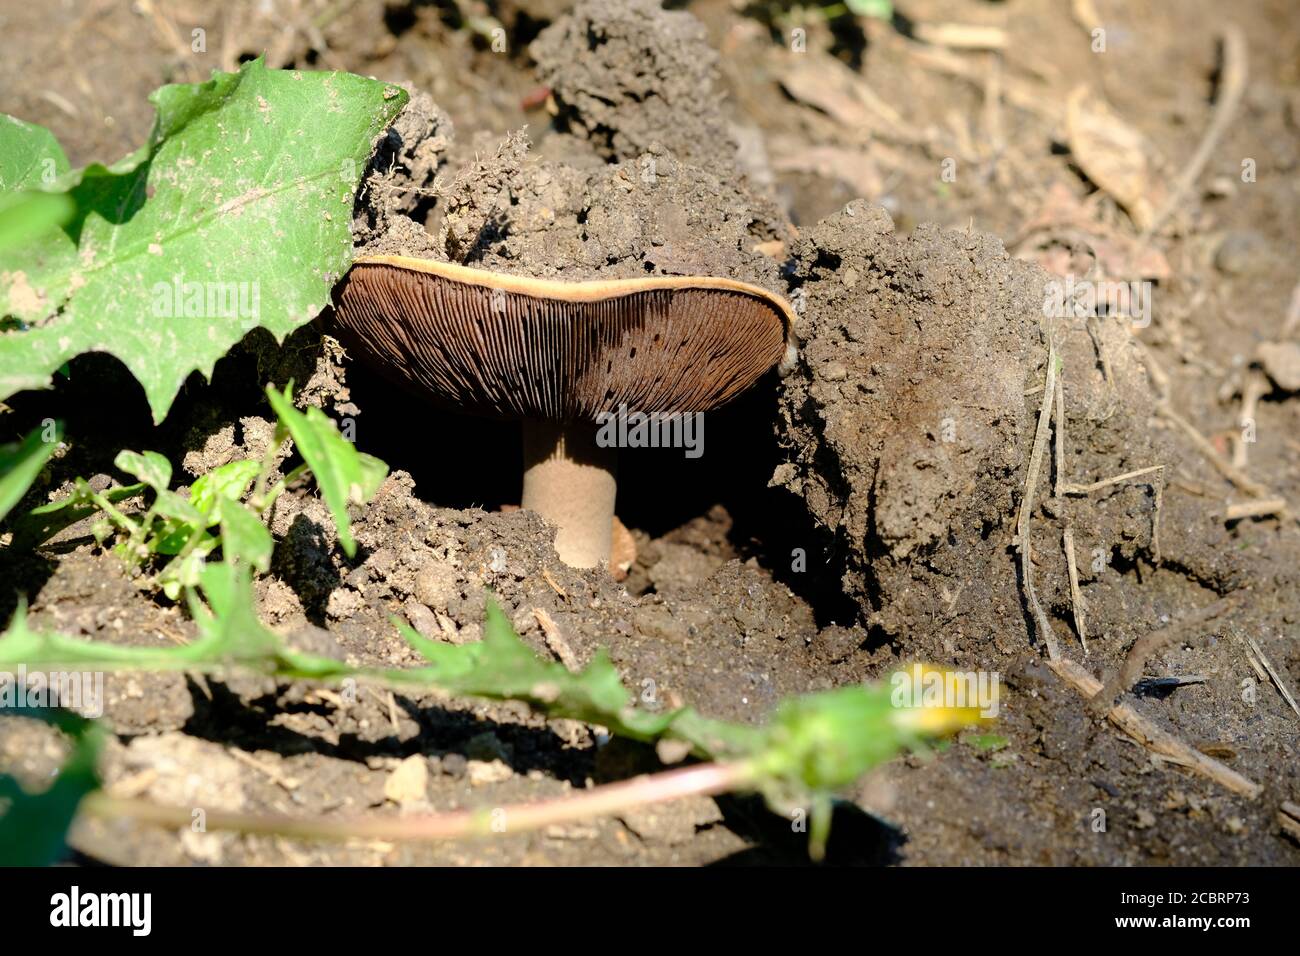 Mature agaricus (Agaricus bitorquis?) mushroom with dark, attached gills and tan/ brown cap. Ottawa, Ontario, Canada. Stock Photo